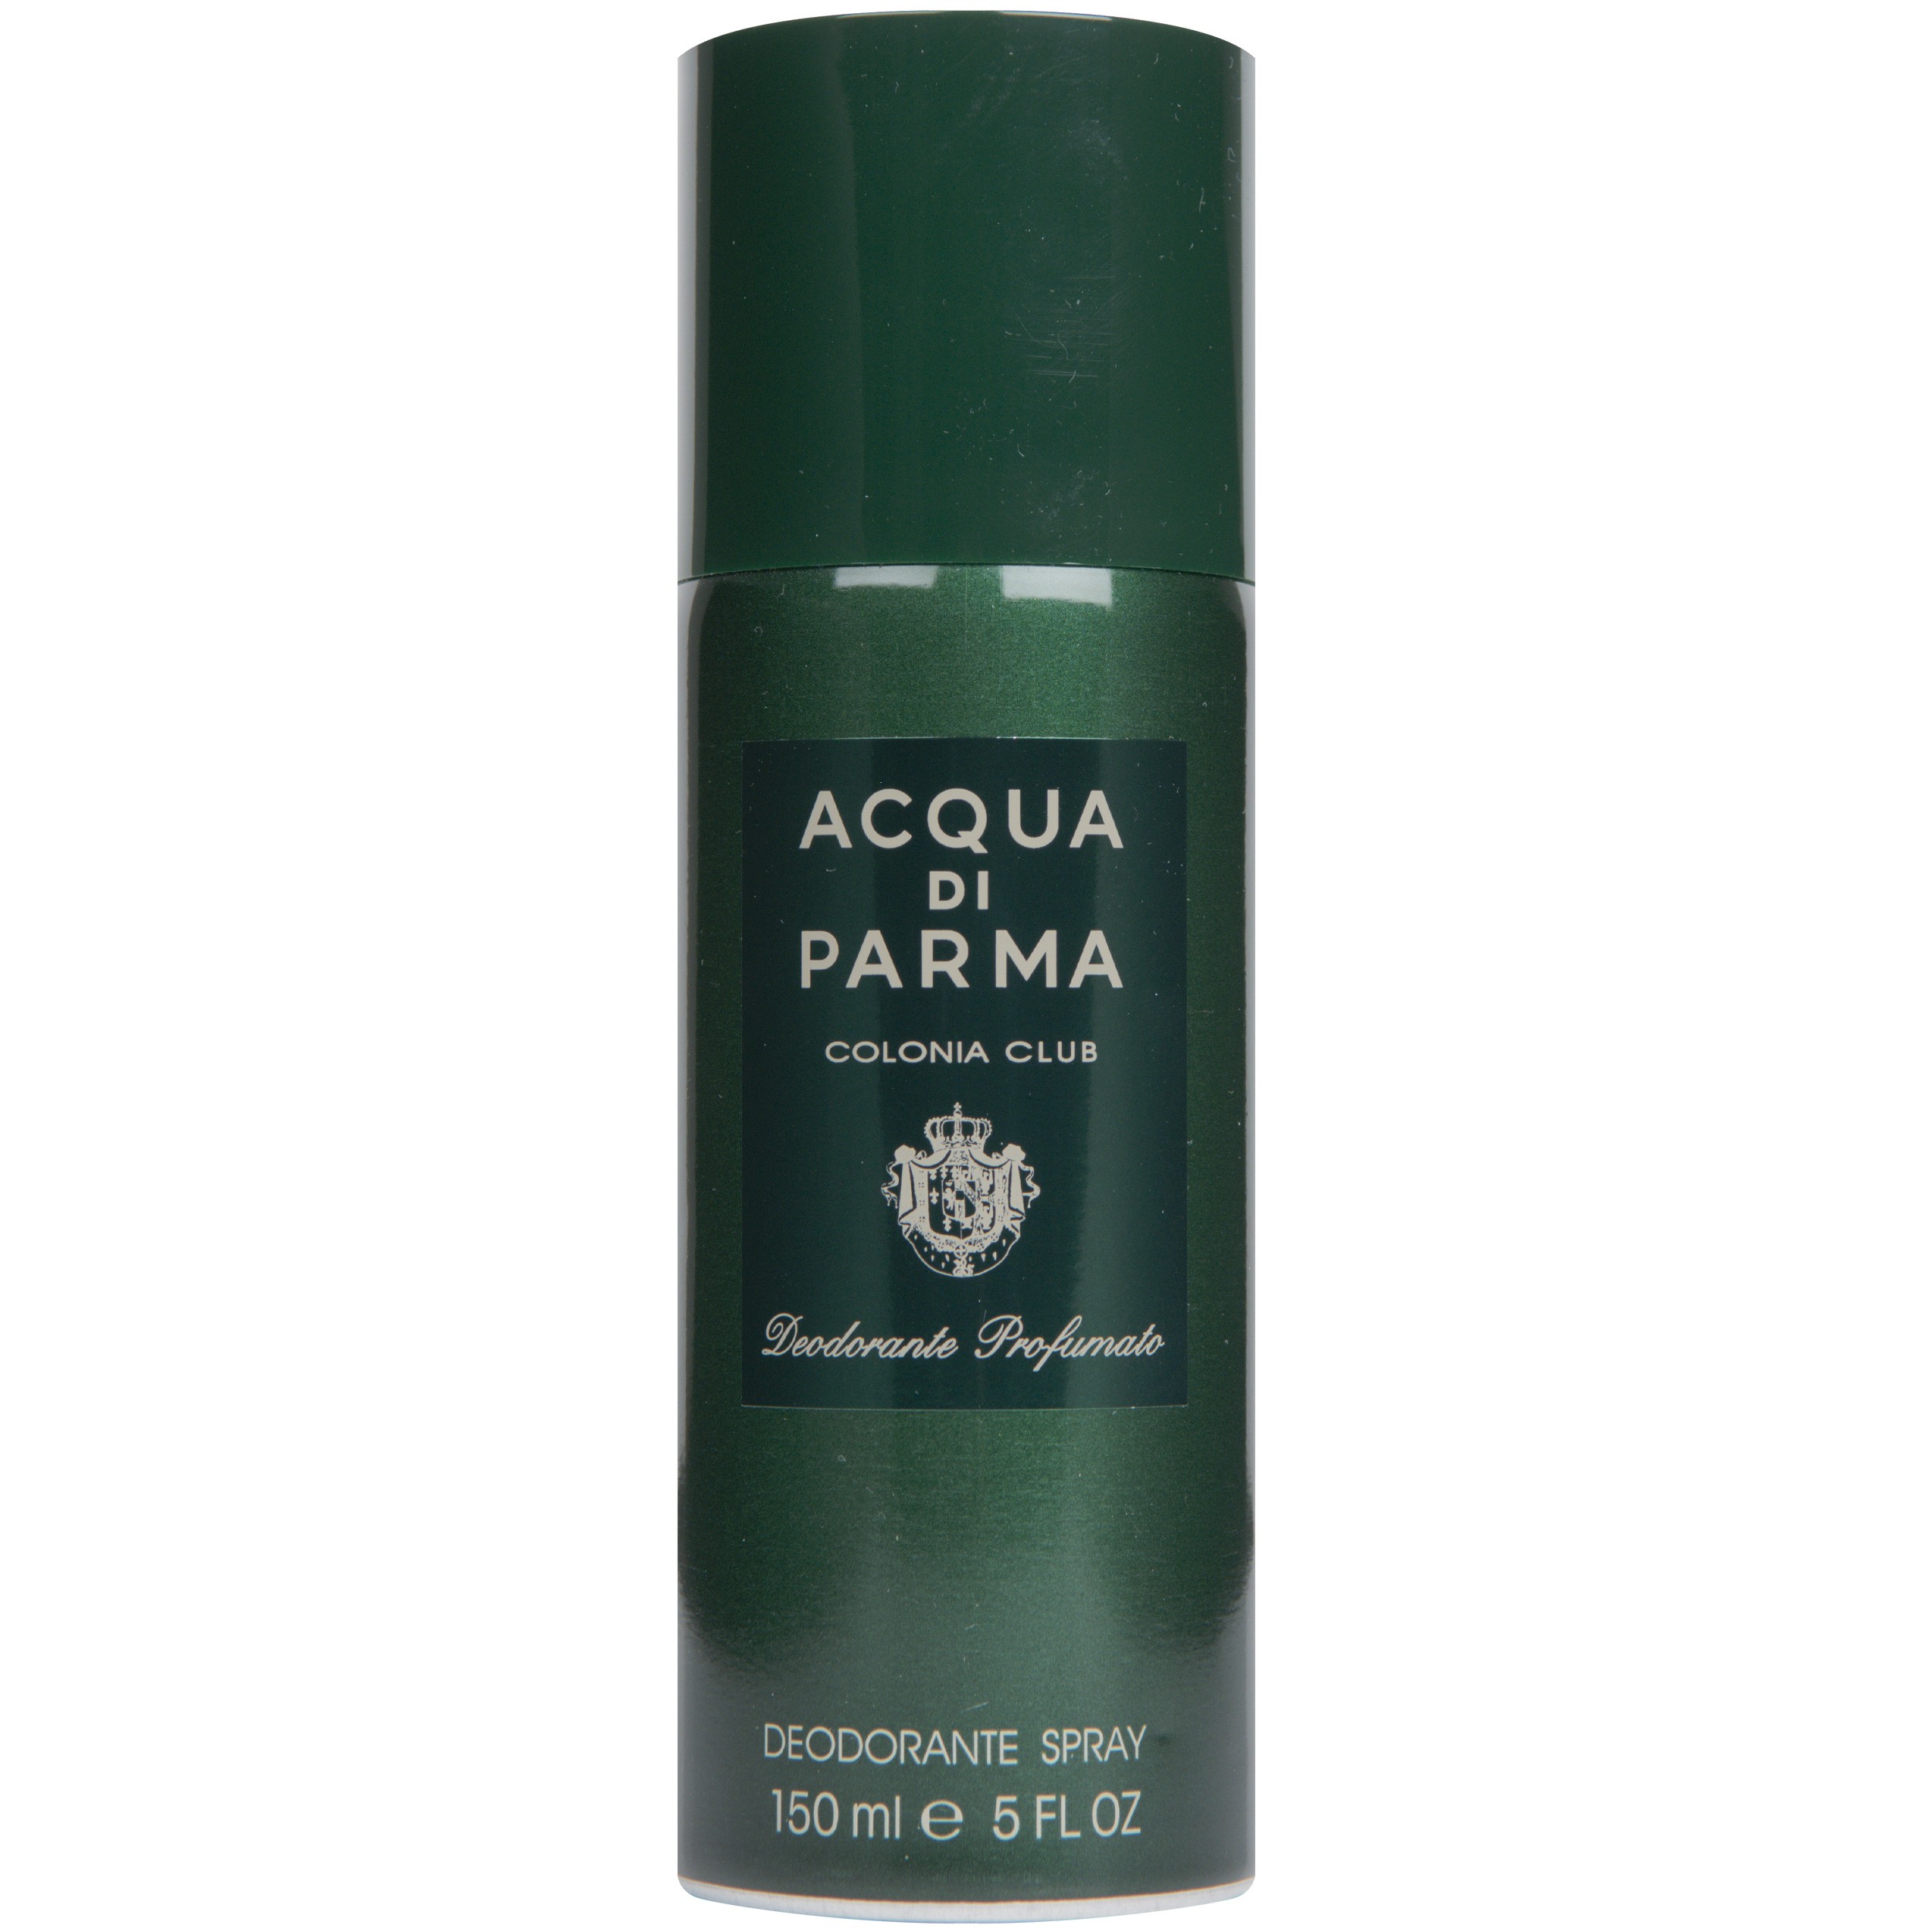 Acqua Di Parma 'Colonia Club' Deodorant Spray 150ml N/A